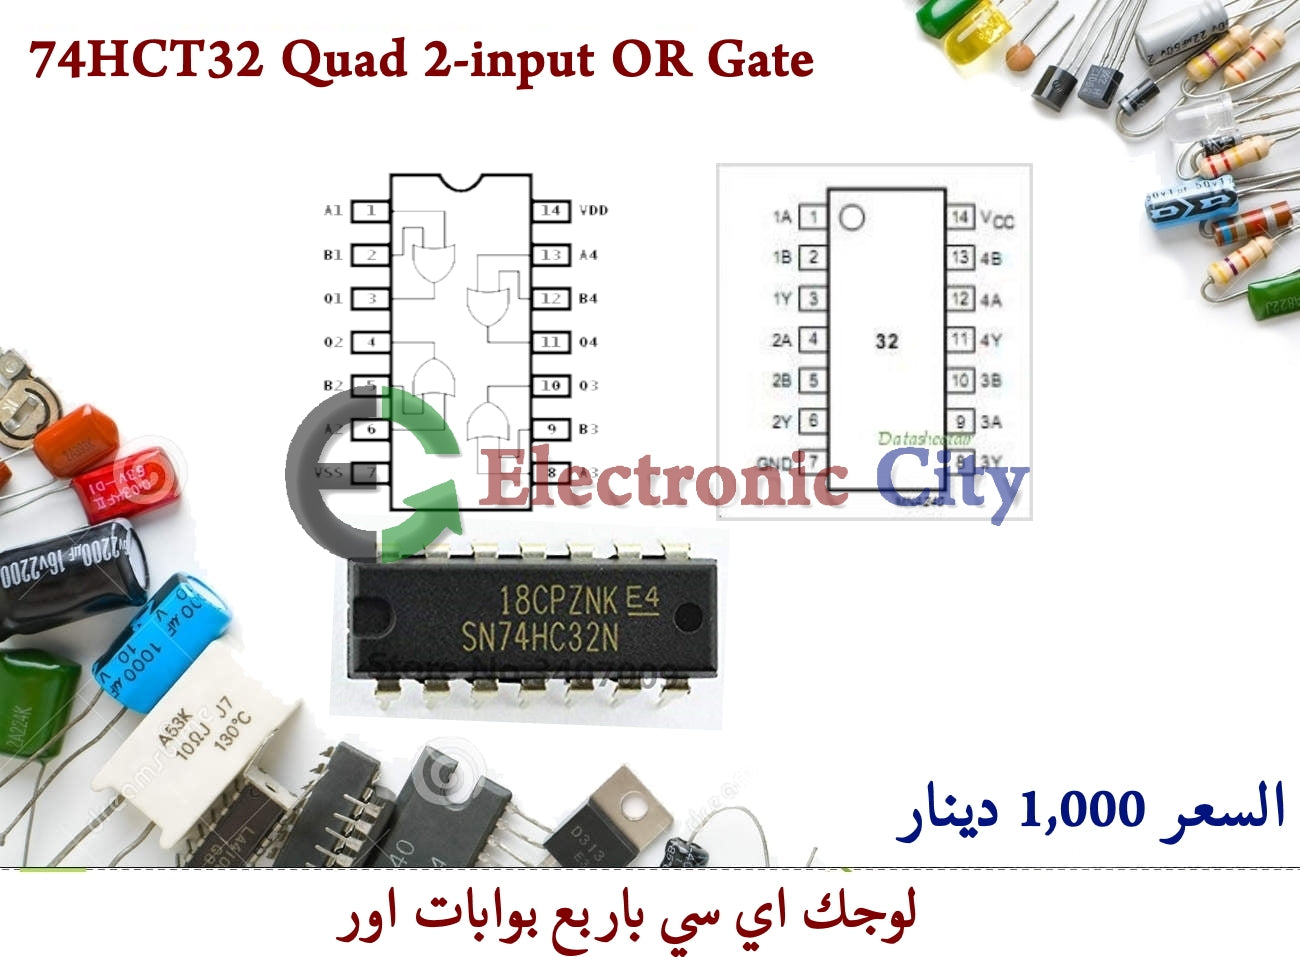 74HCT32 Quad 2-input OR Gate